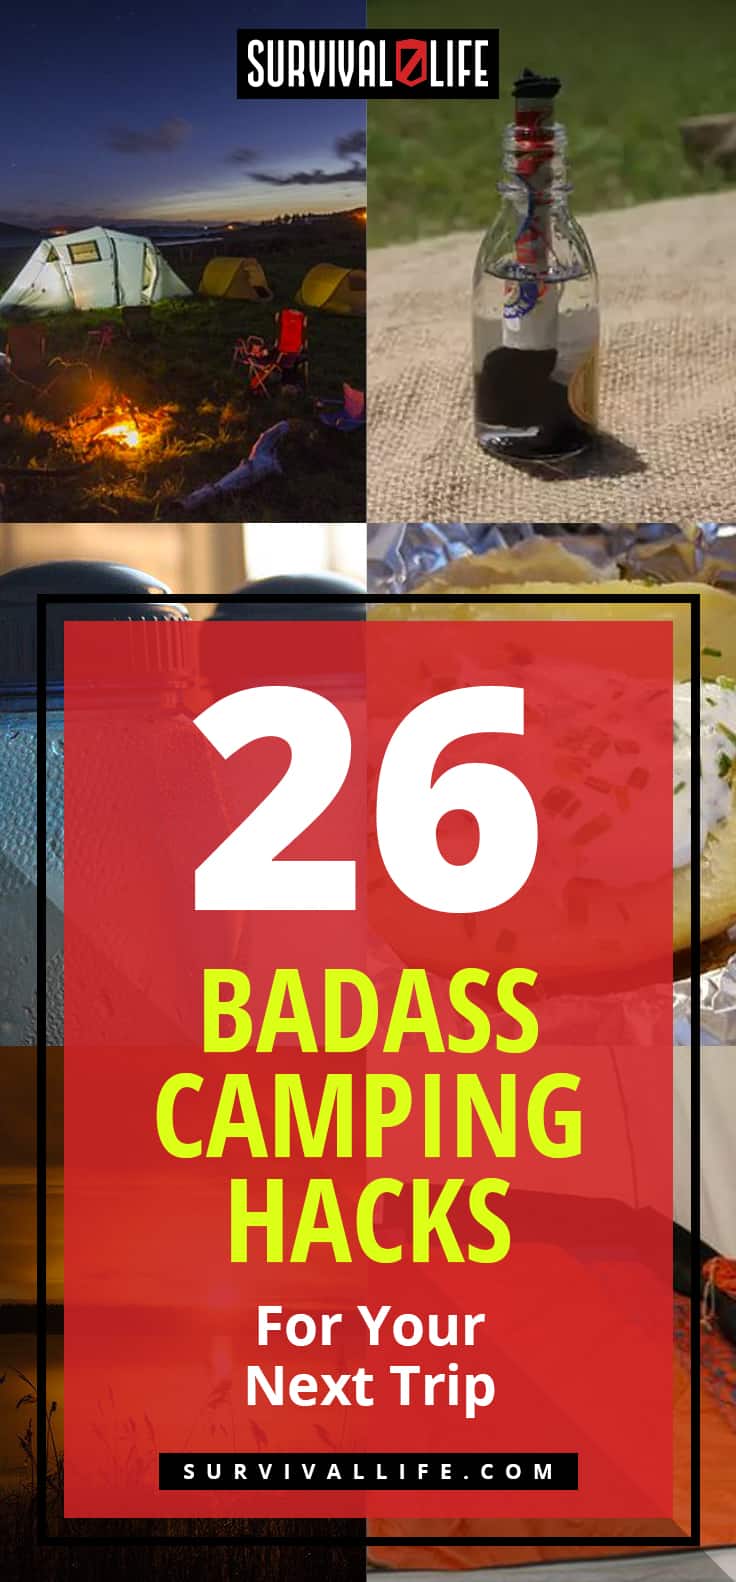 Placard | Camping hacks | Badass Camping Hacks For Your Next Trip